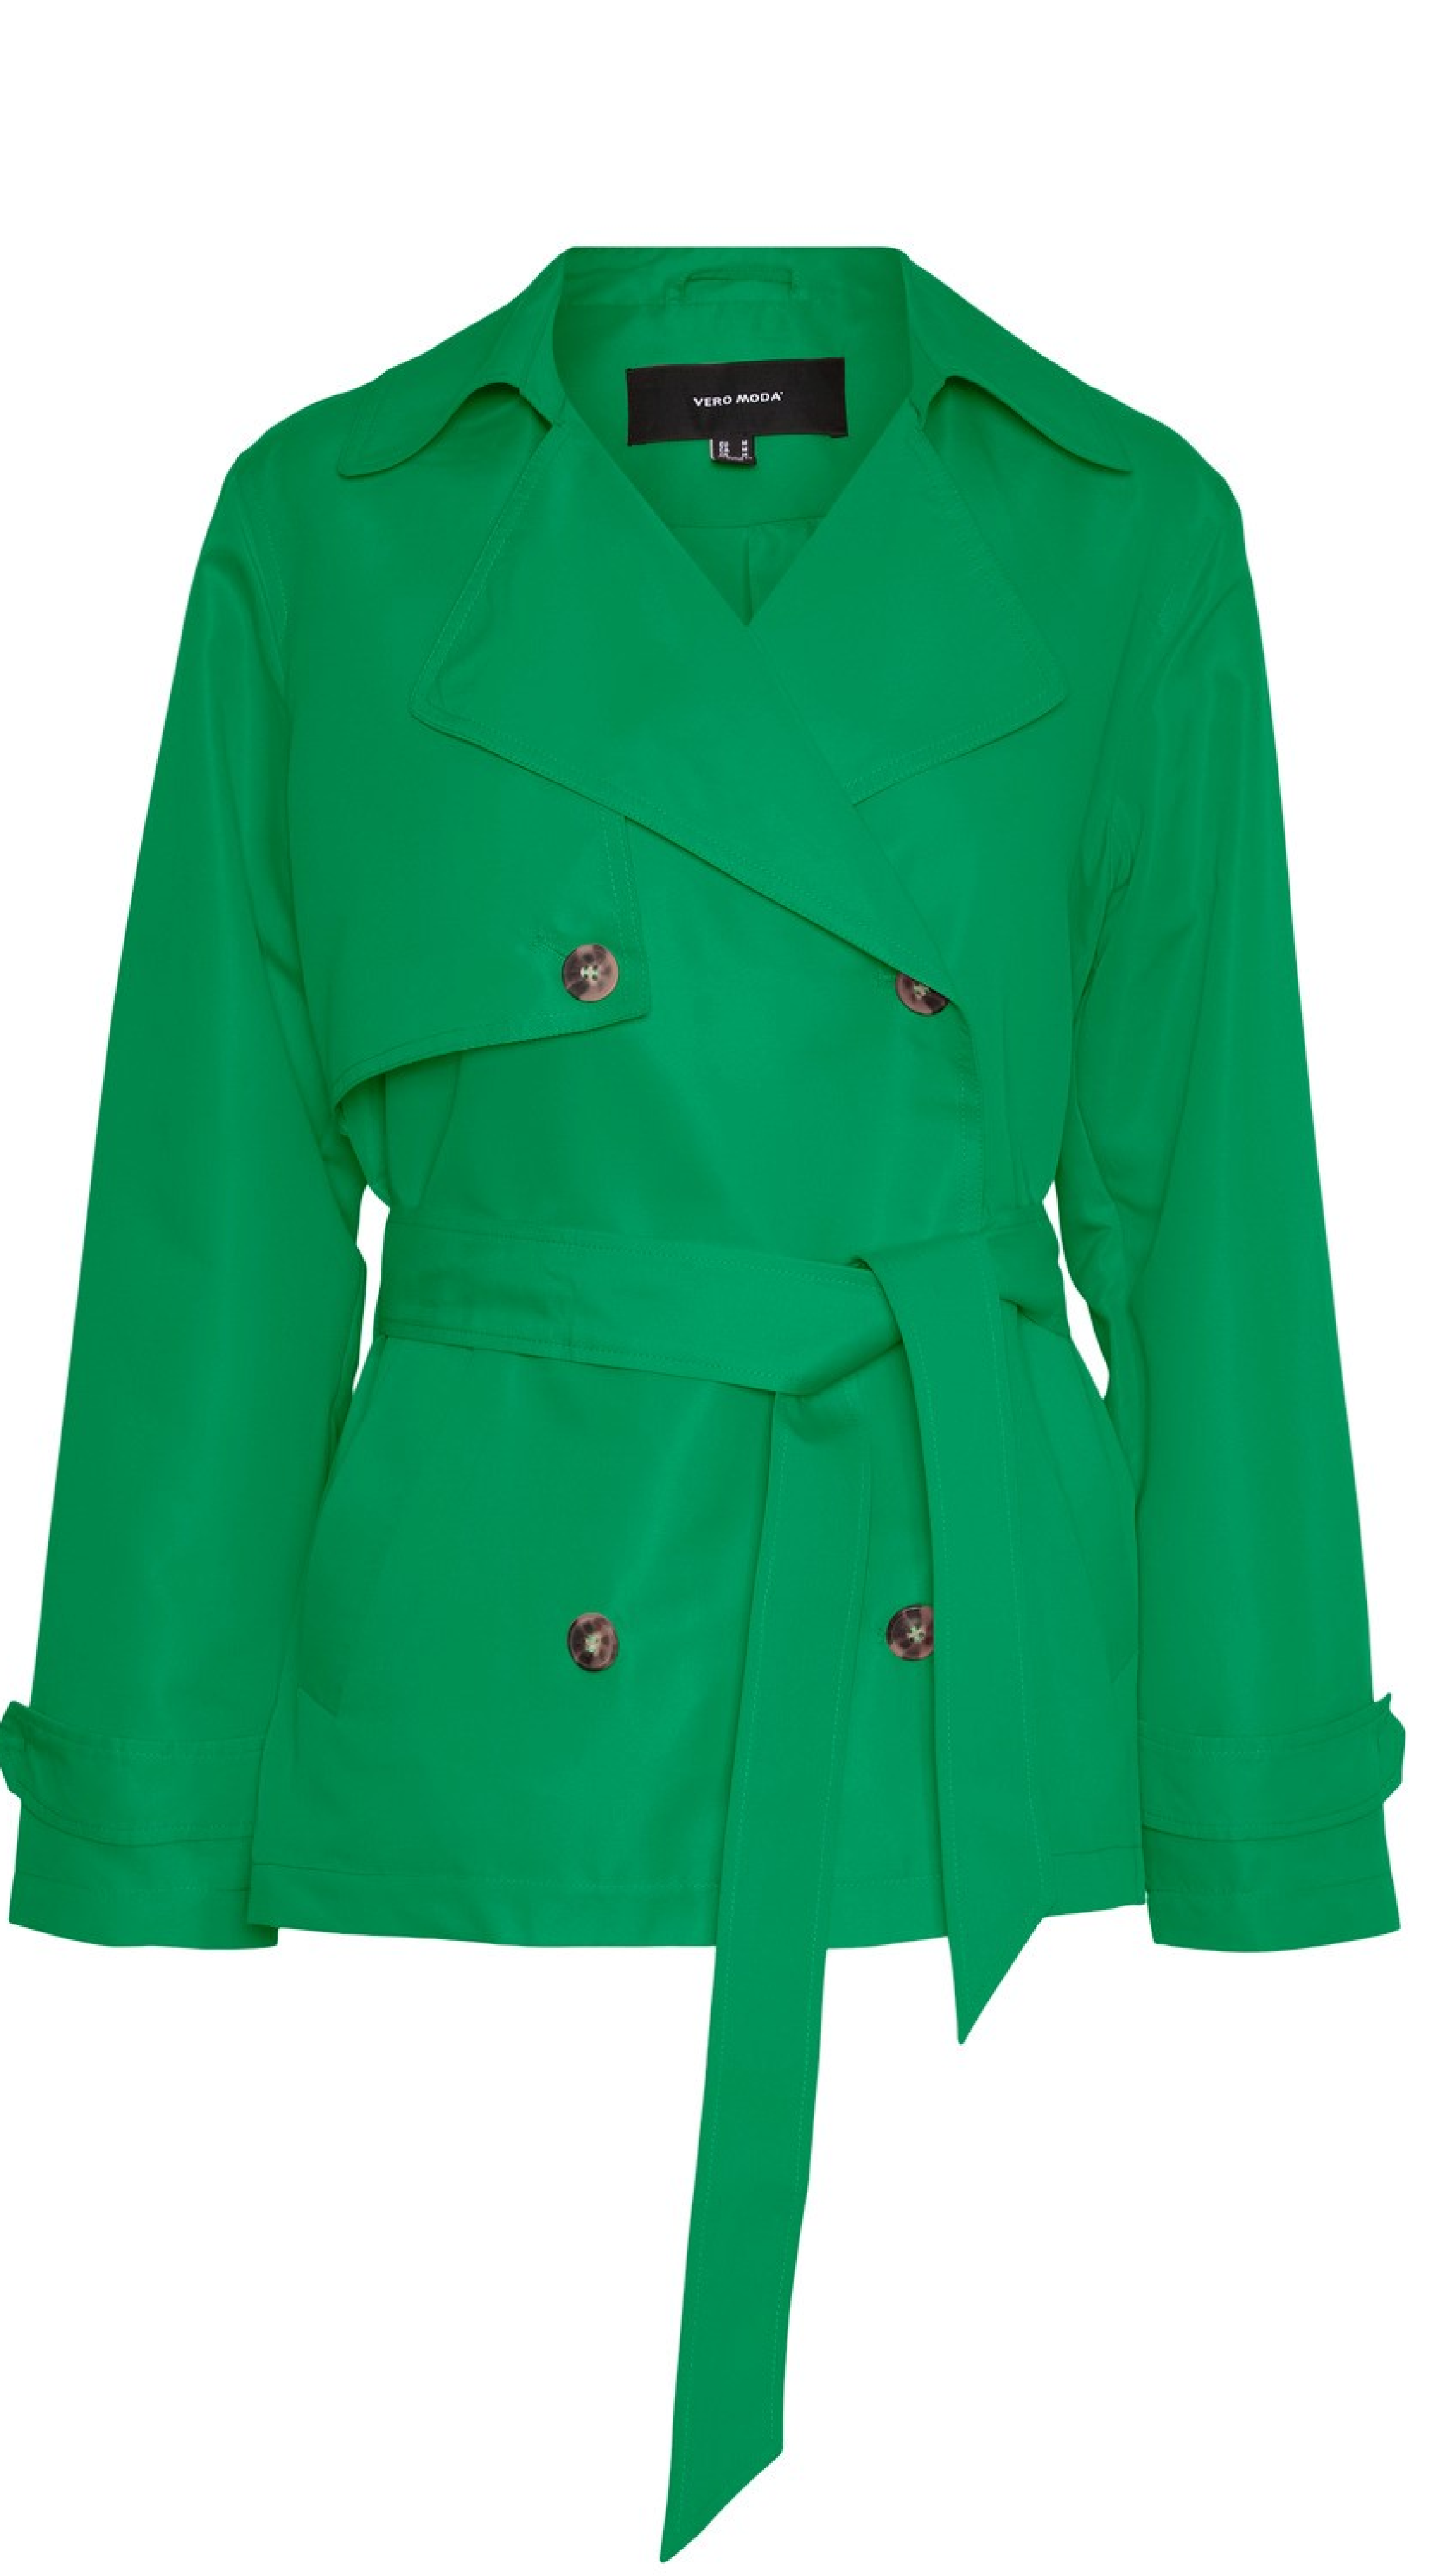 Pernillemie Green Short Trench Coat